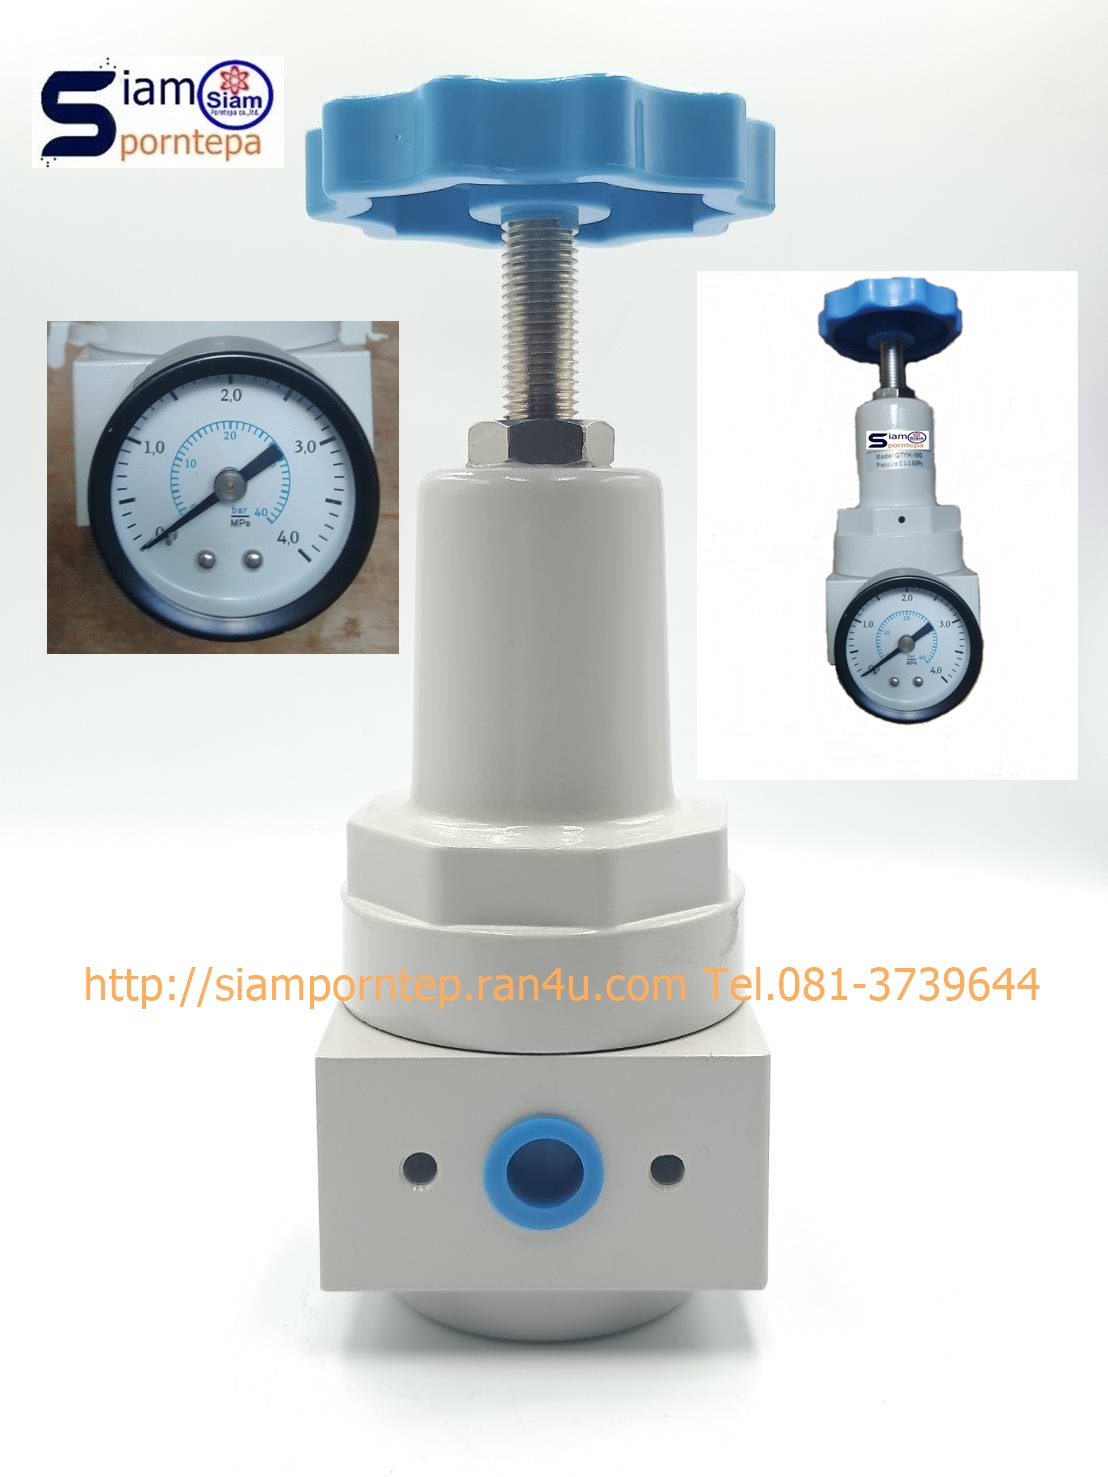 QTYH-8 Regulator high pressure เรกกูเลเตอร์ แรงดันสูง size 1/4" Pressure 5-35bar (Kg/cm2) 75-525psi ใช้ปรับแรงดัน ลม